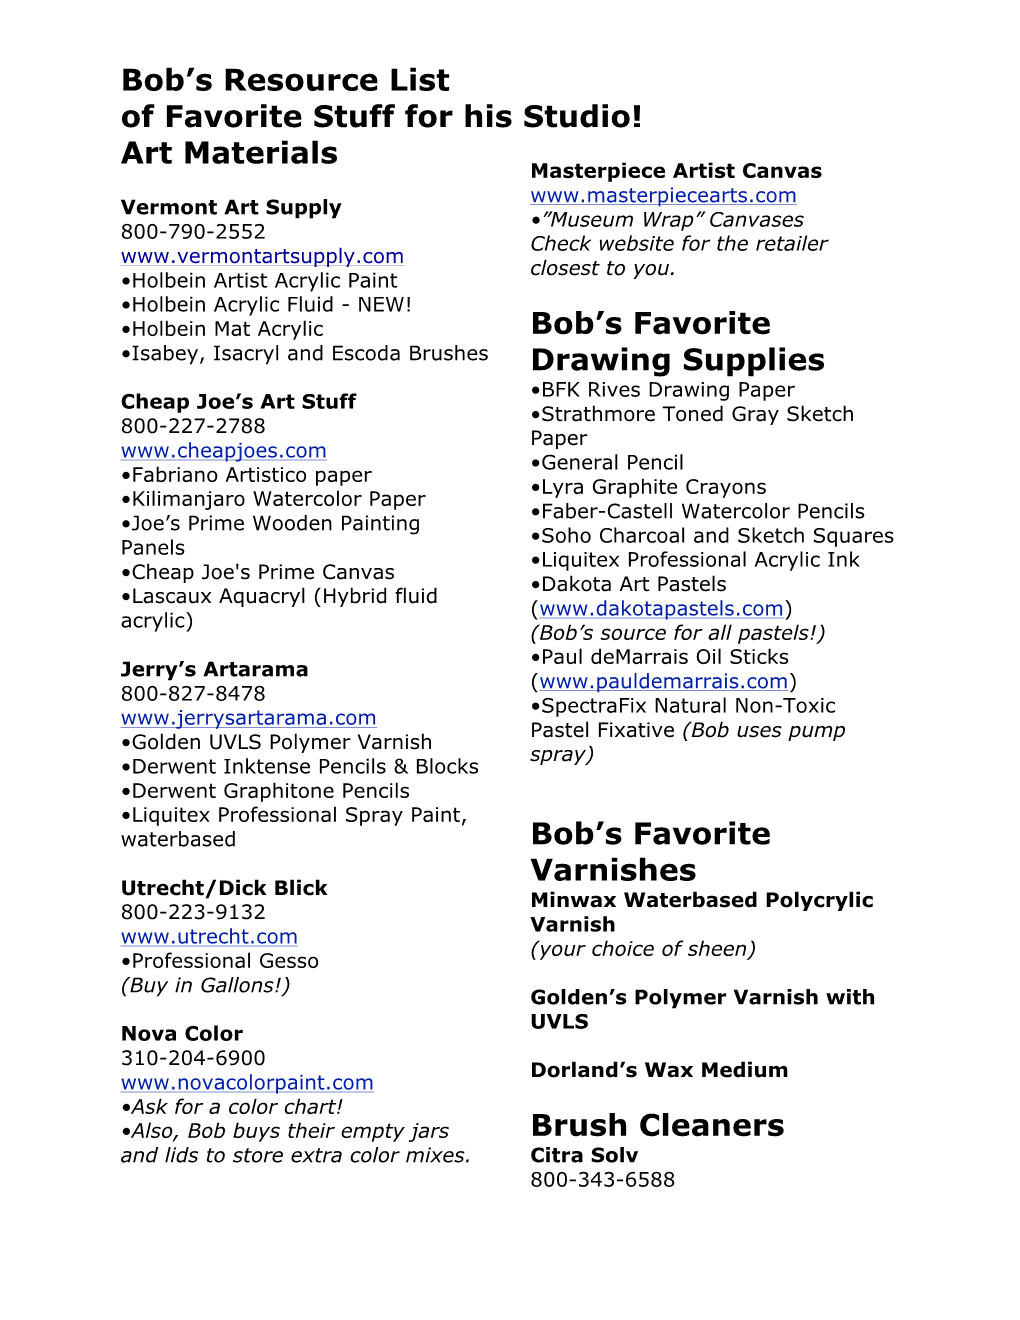 Bob's Resource List of Favorite Stuff for His Studio!